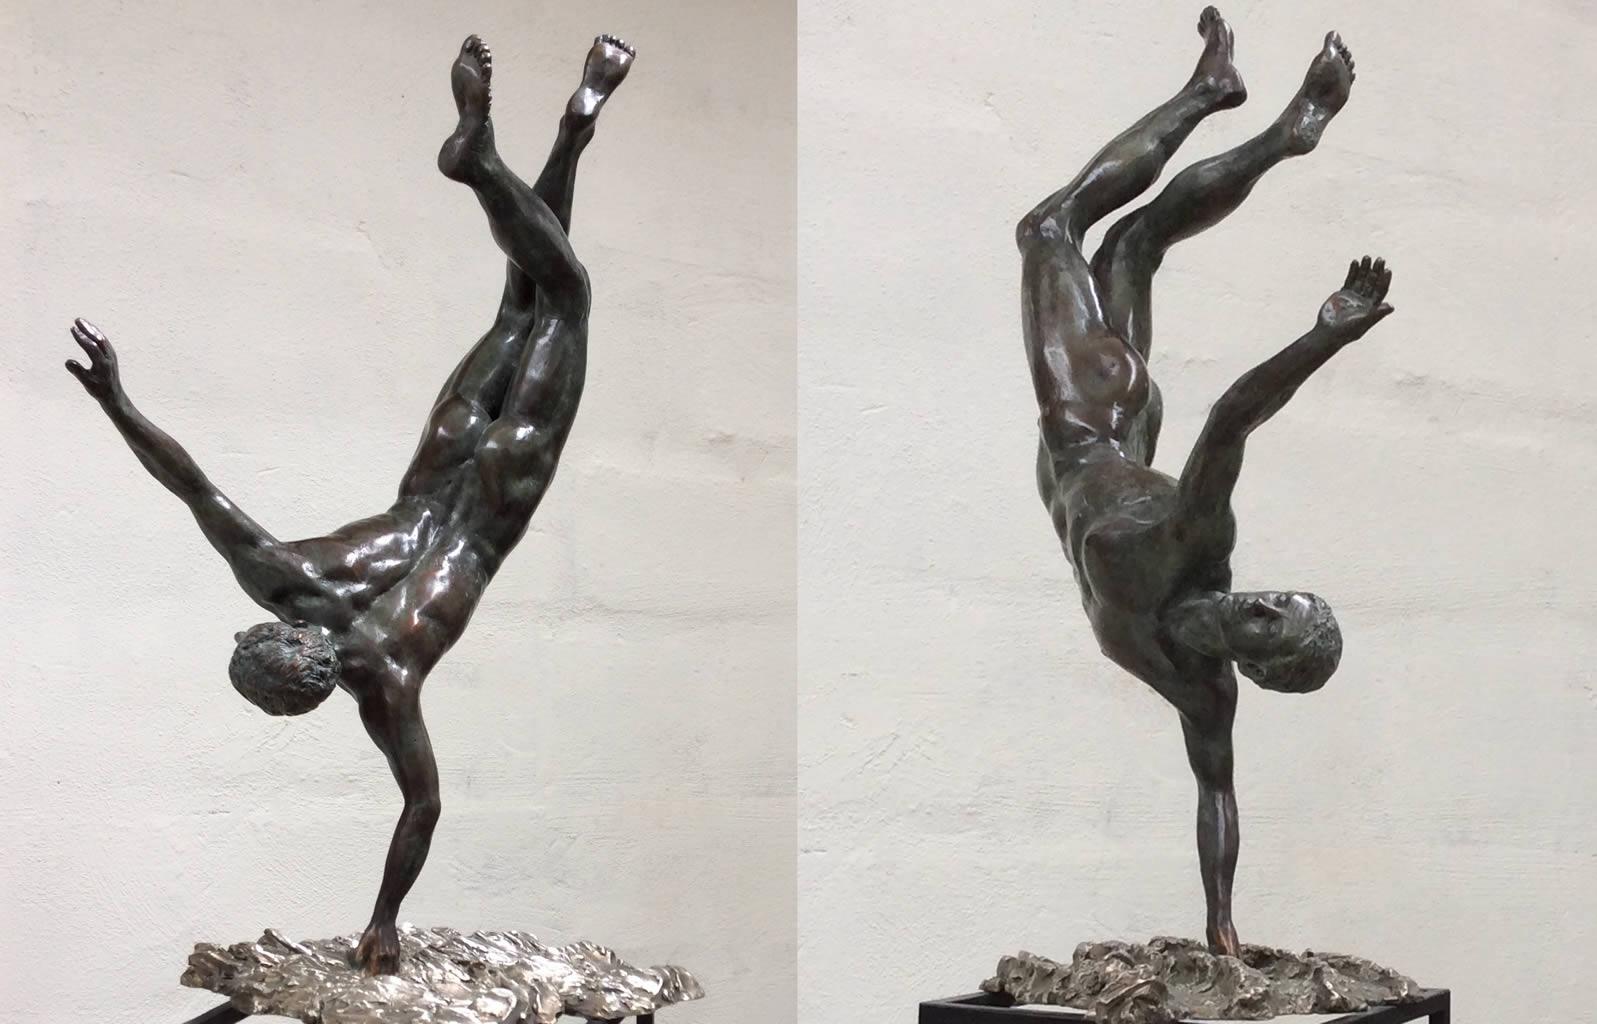 Zenith Bronze Sculpture Mythology Classic Contemporary Nude Male Figure - Gold Figurative Sculpture by Margot Homan